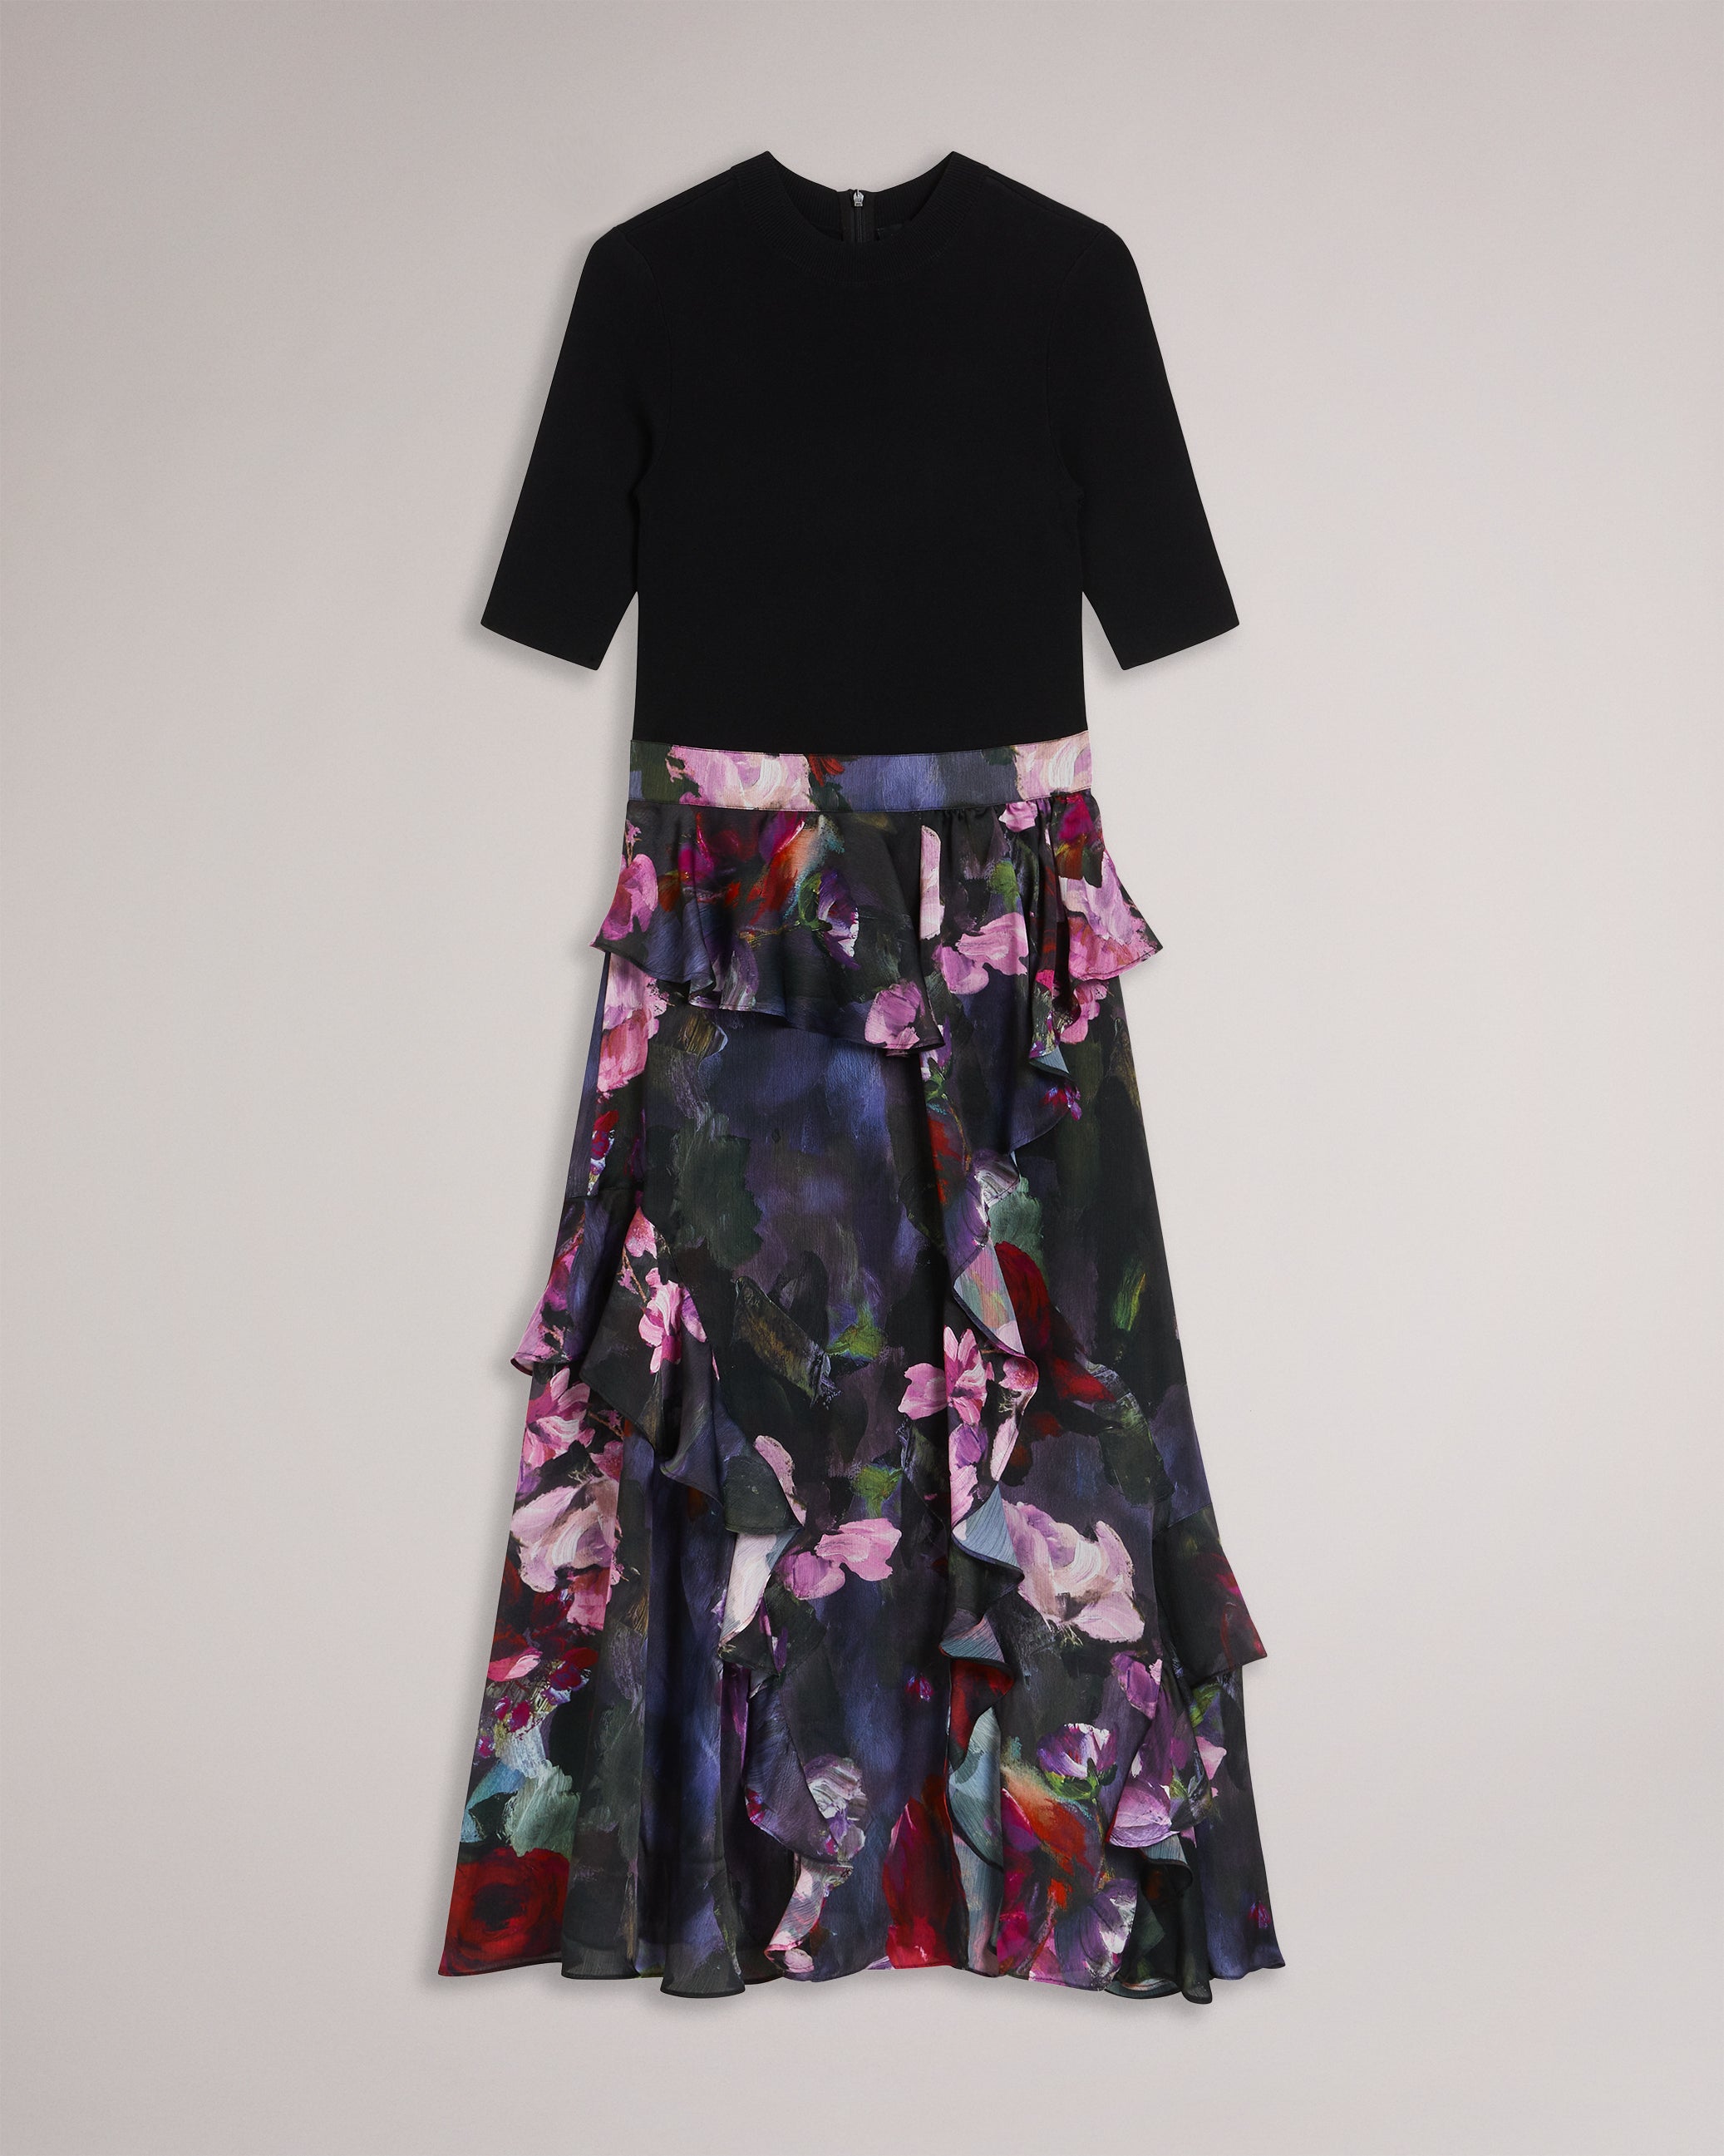 Rowana Fitted Knit Bodice Dress With Ruffle Skirt Black